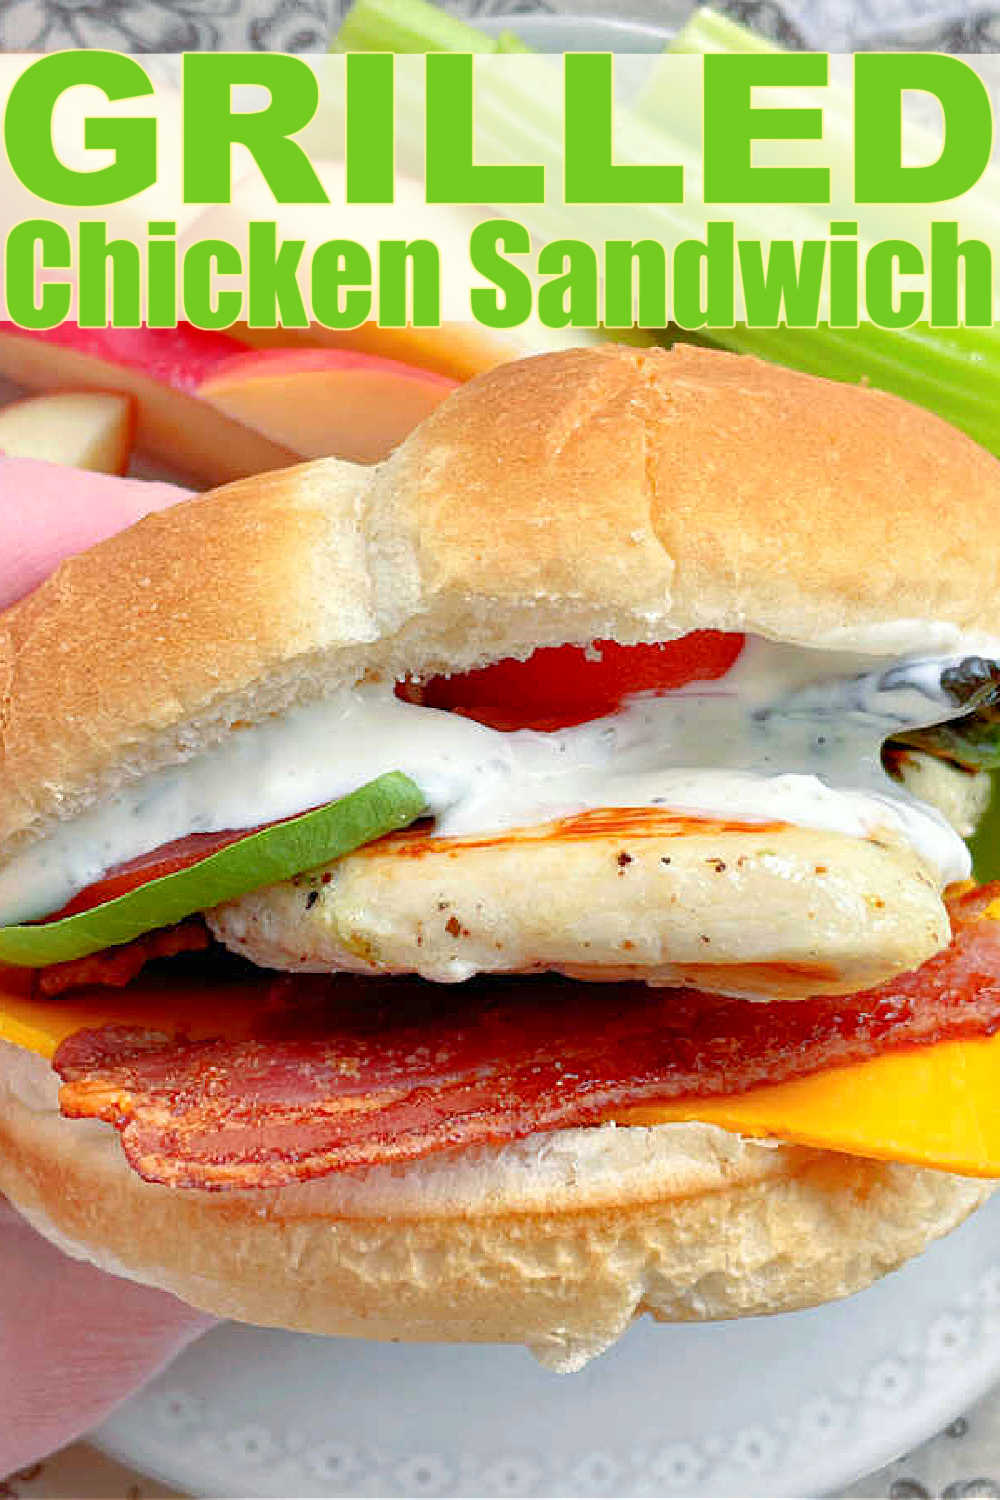 Grilled Chicken Sandwich | Foodtastic Mom #grilledchickensandwich #chickenrecipes #grilledchickenrecipes #sandwichrecipes #GFIndoorGrilling #Sponsored